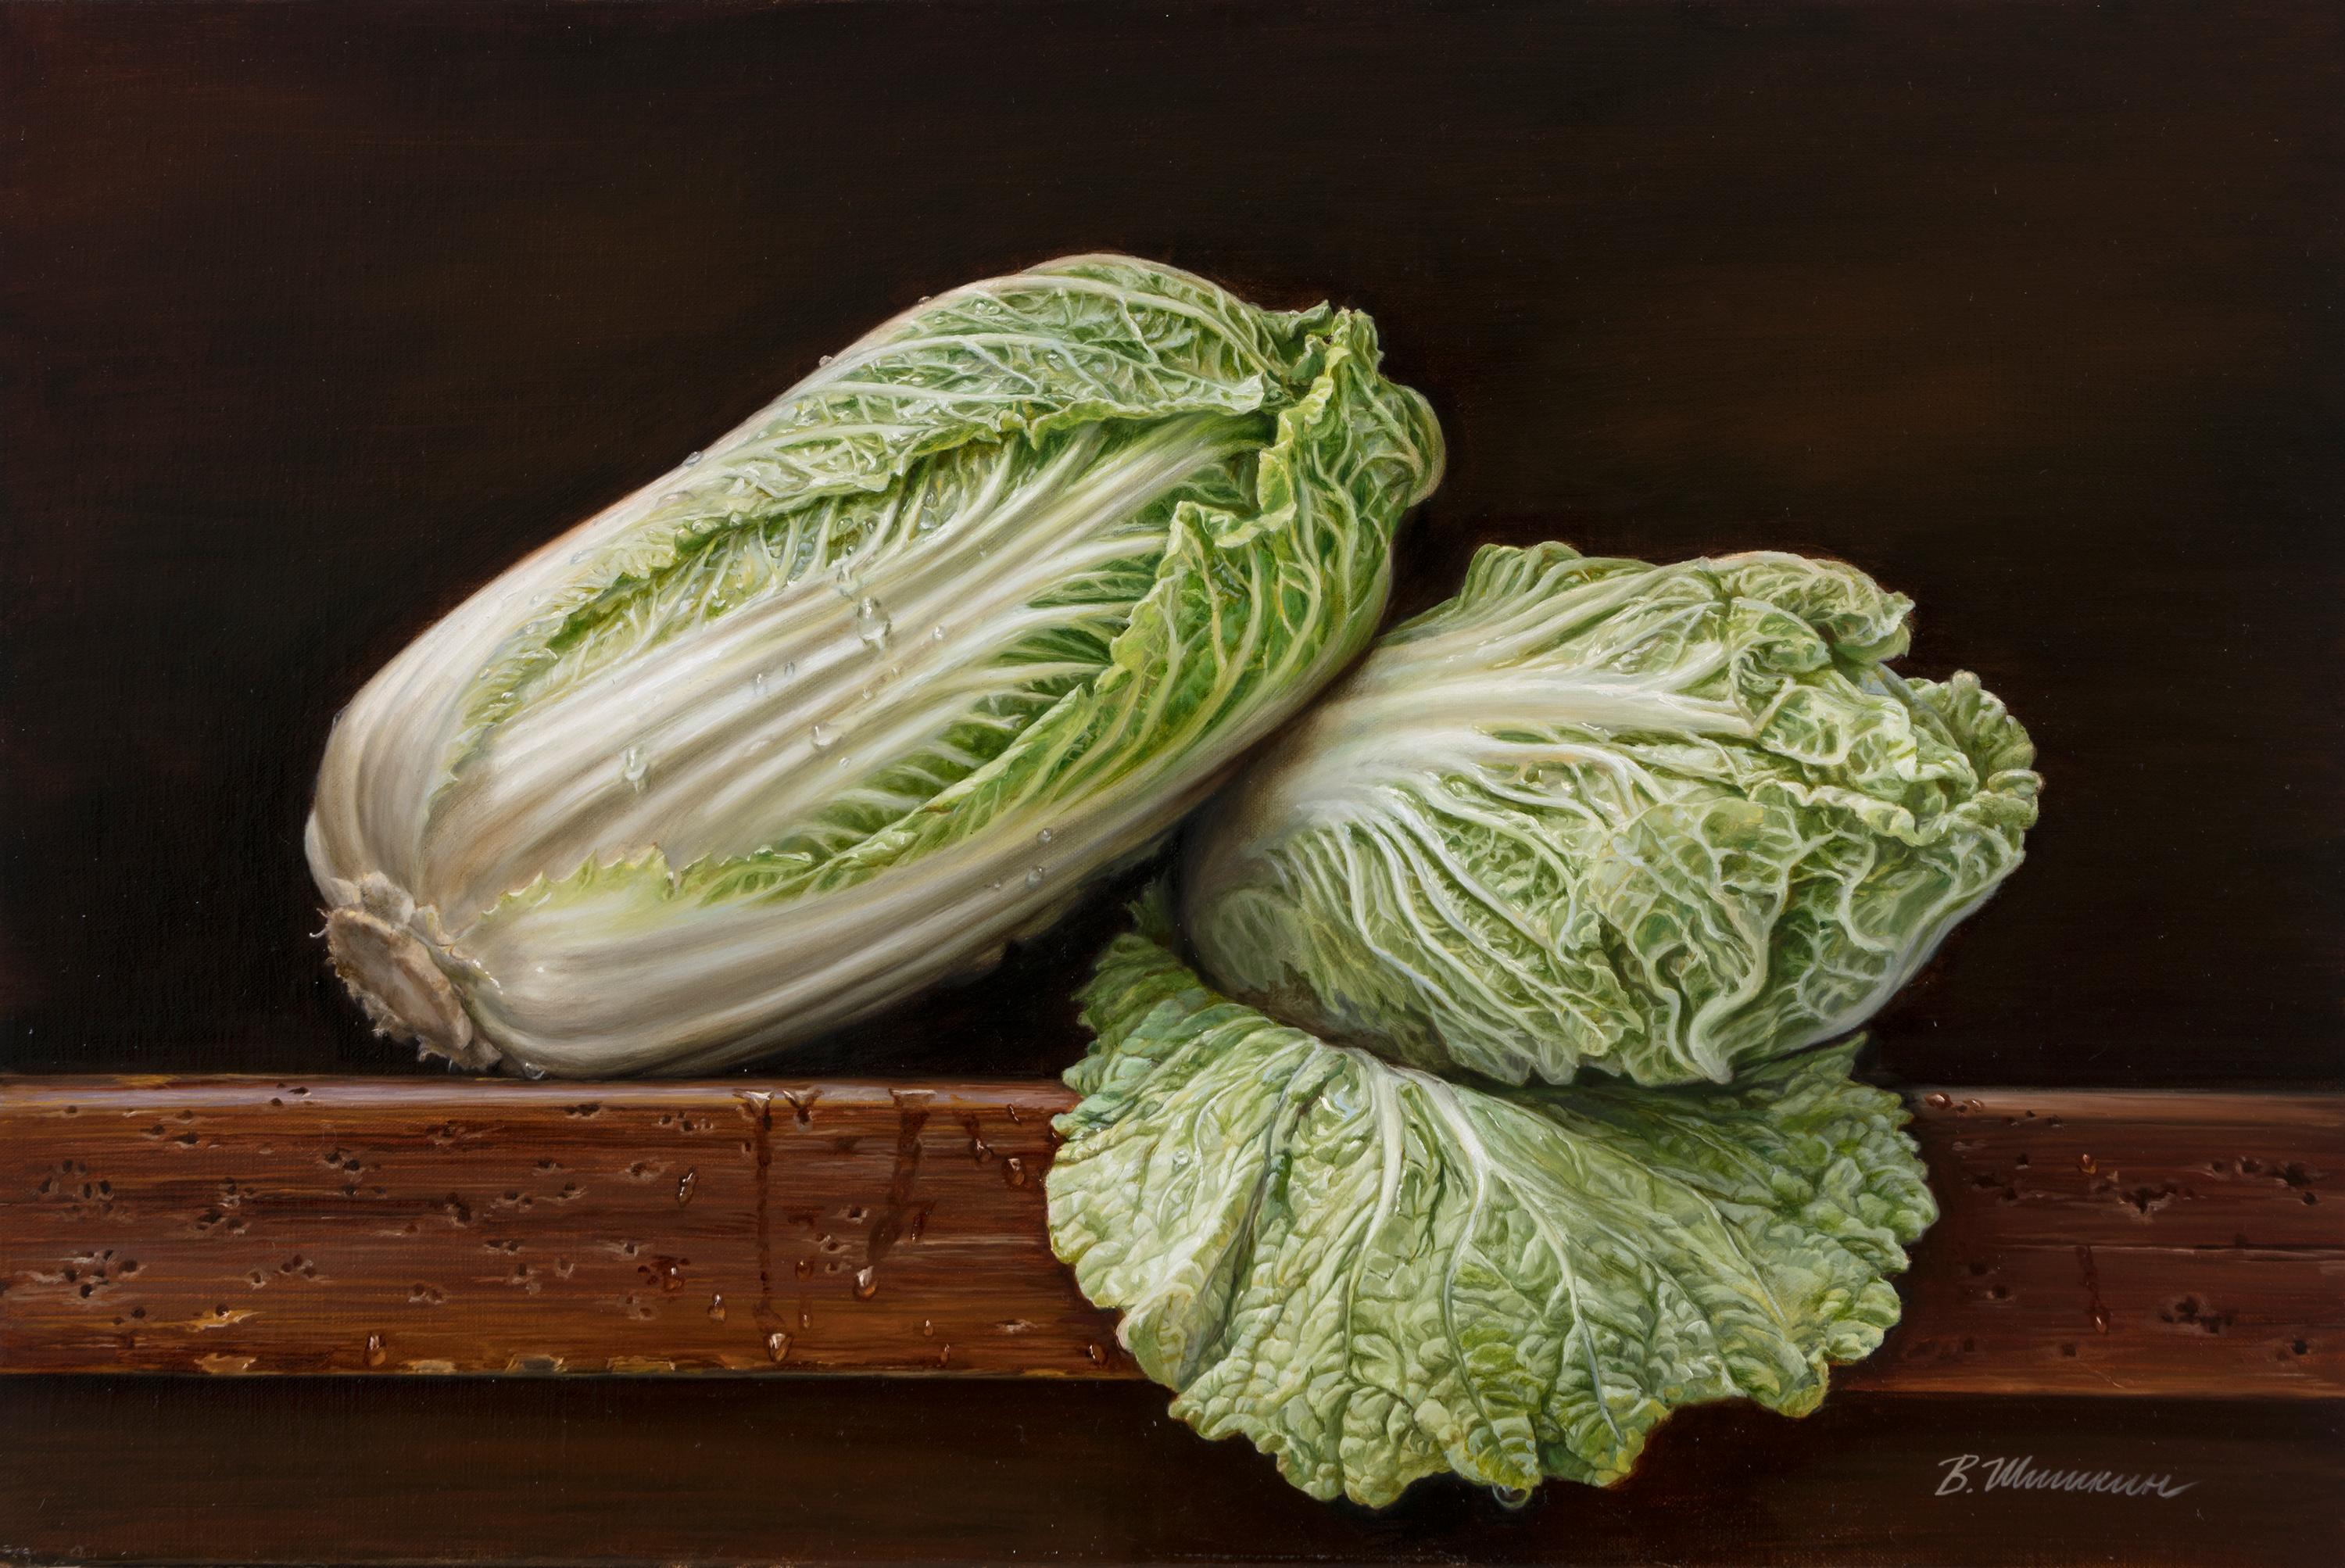 Chinese cabbage. Original modern art painting